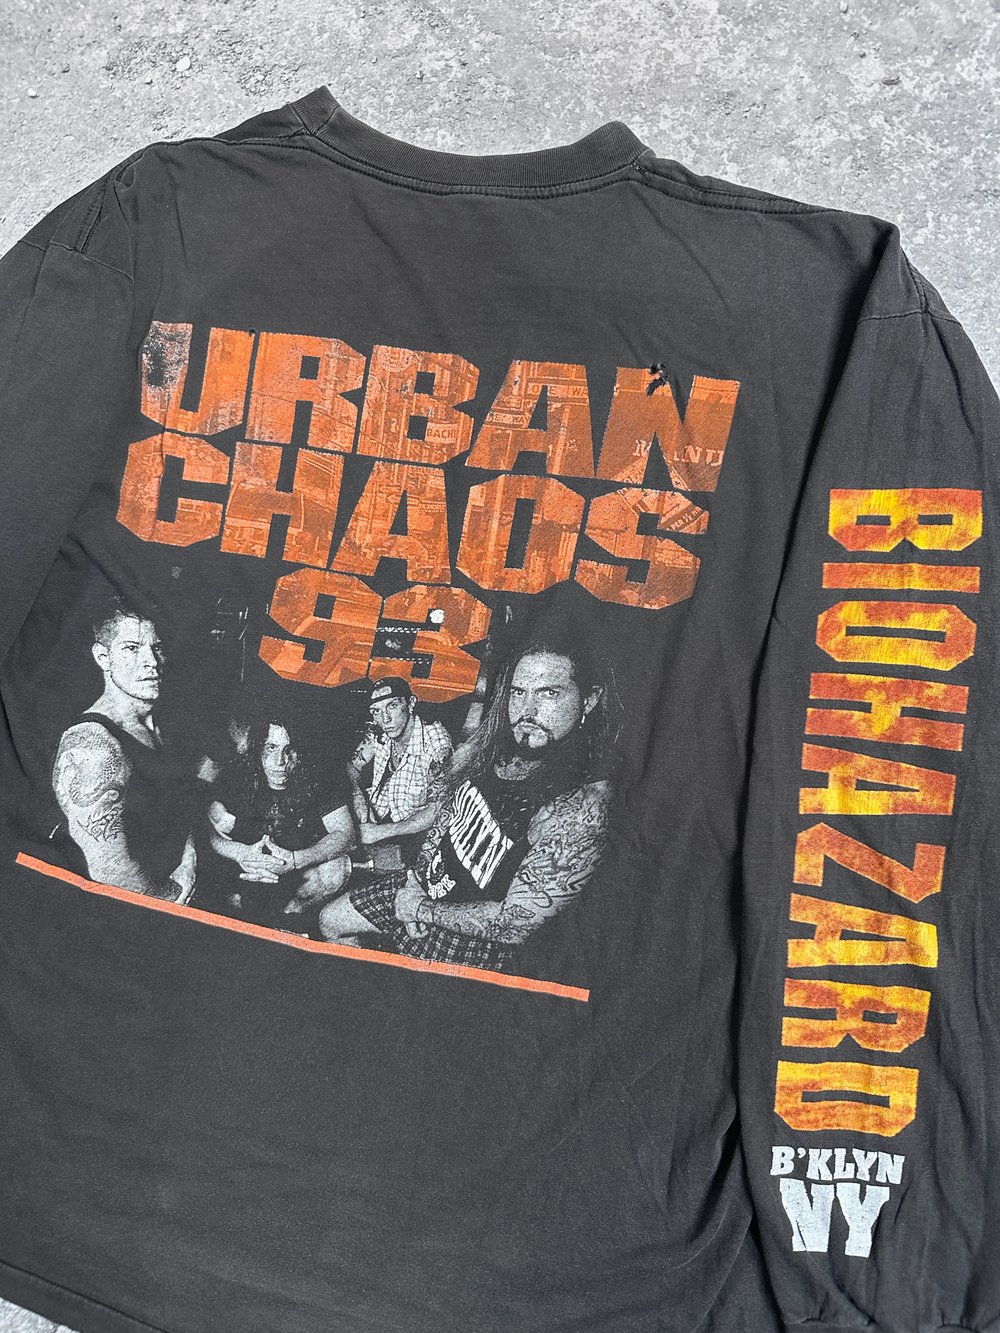 Biohazard 1992 ‘Urban Discipline’ Longsleeve Shirt